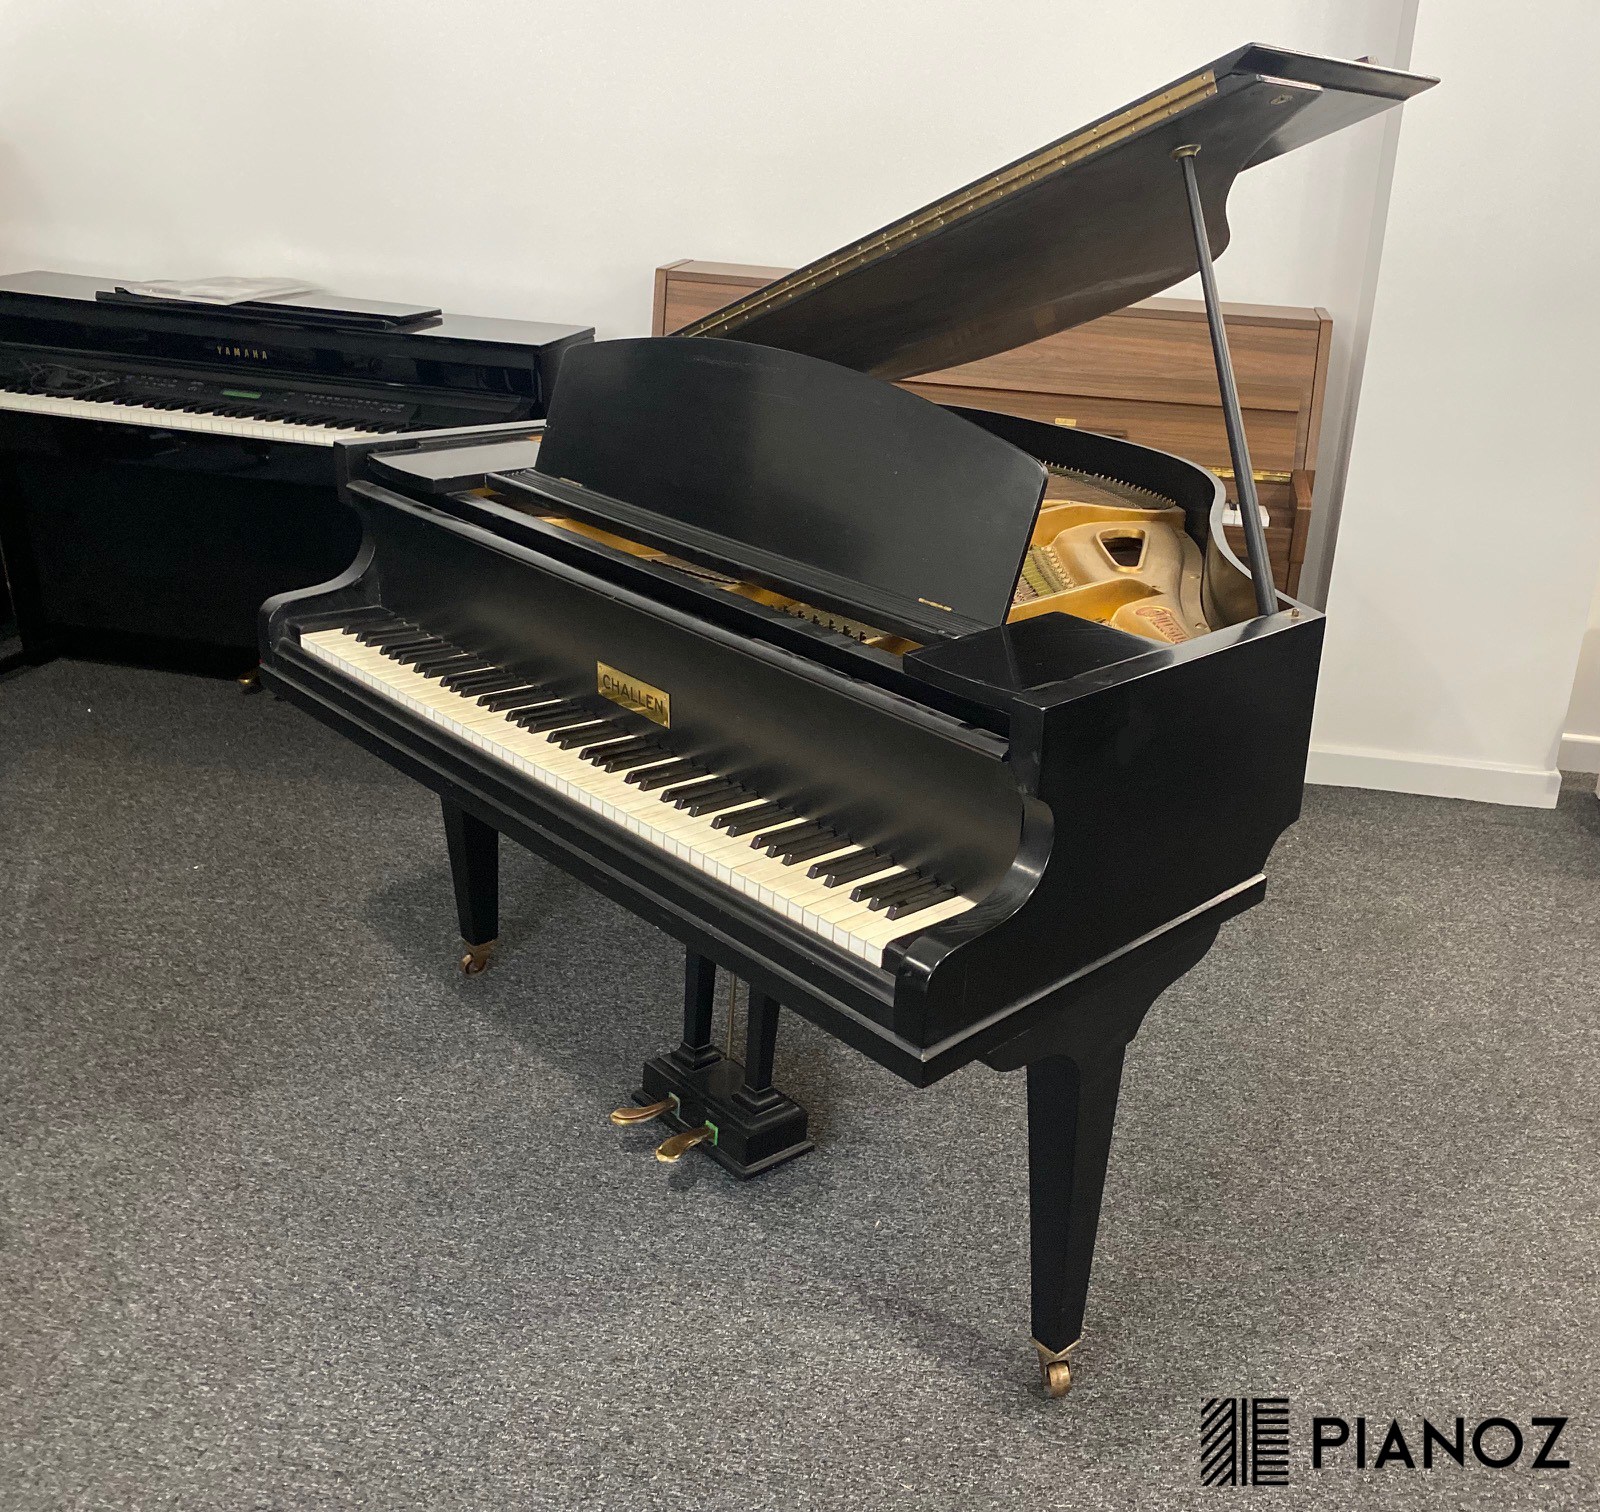 Challen Black Satin Baby Grand Piano piano for sale in UK